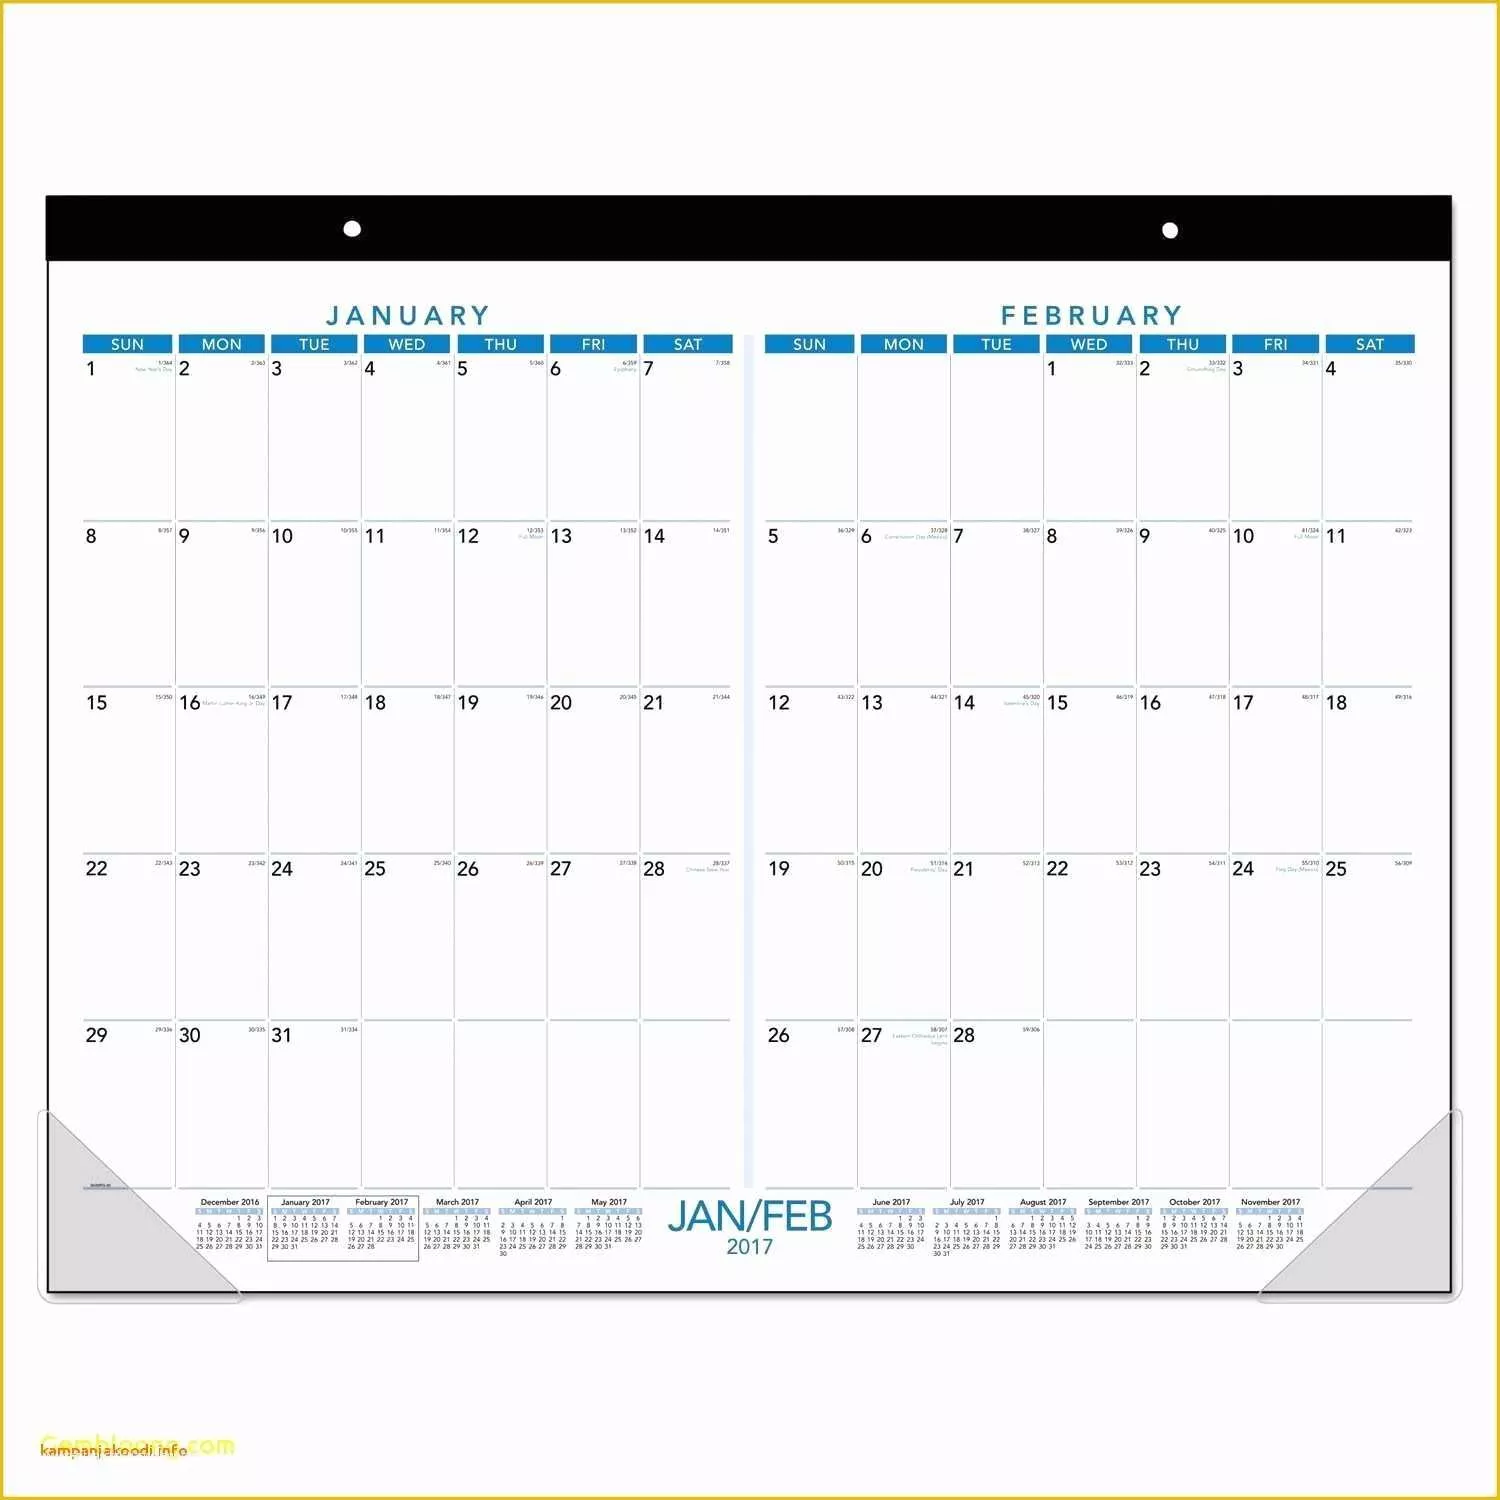 Calendar Template Indesign Free Of Details associated with 2019 Calendar Template Indesign